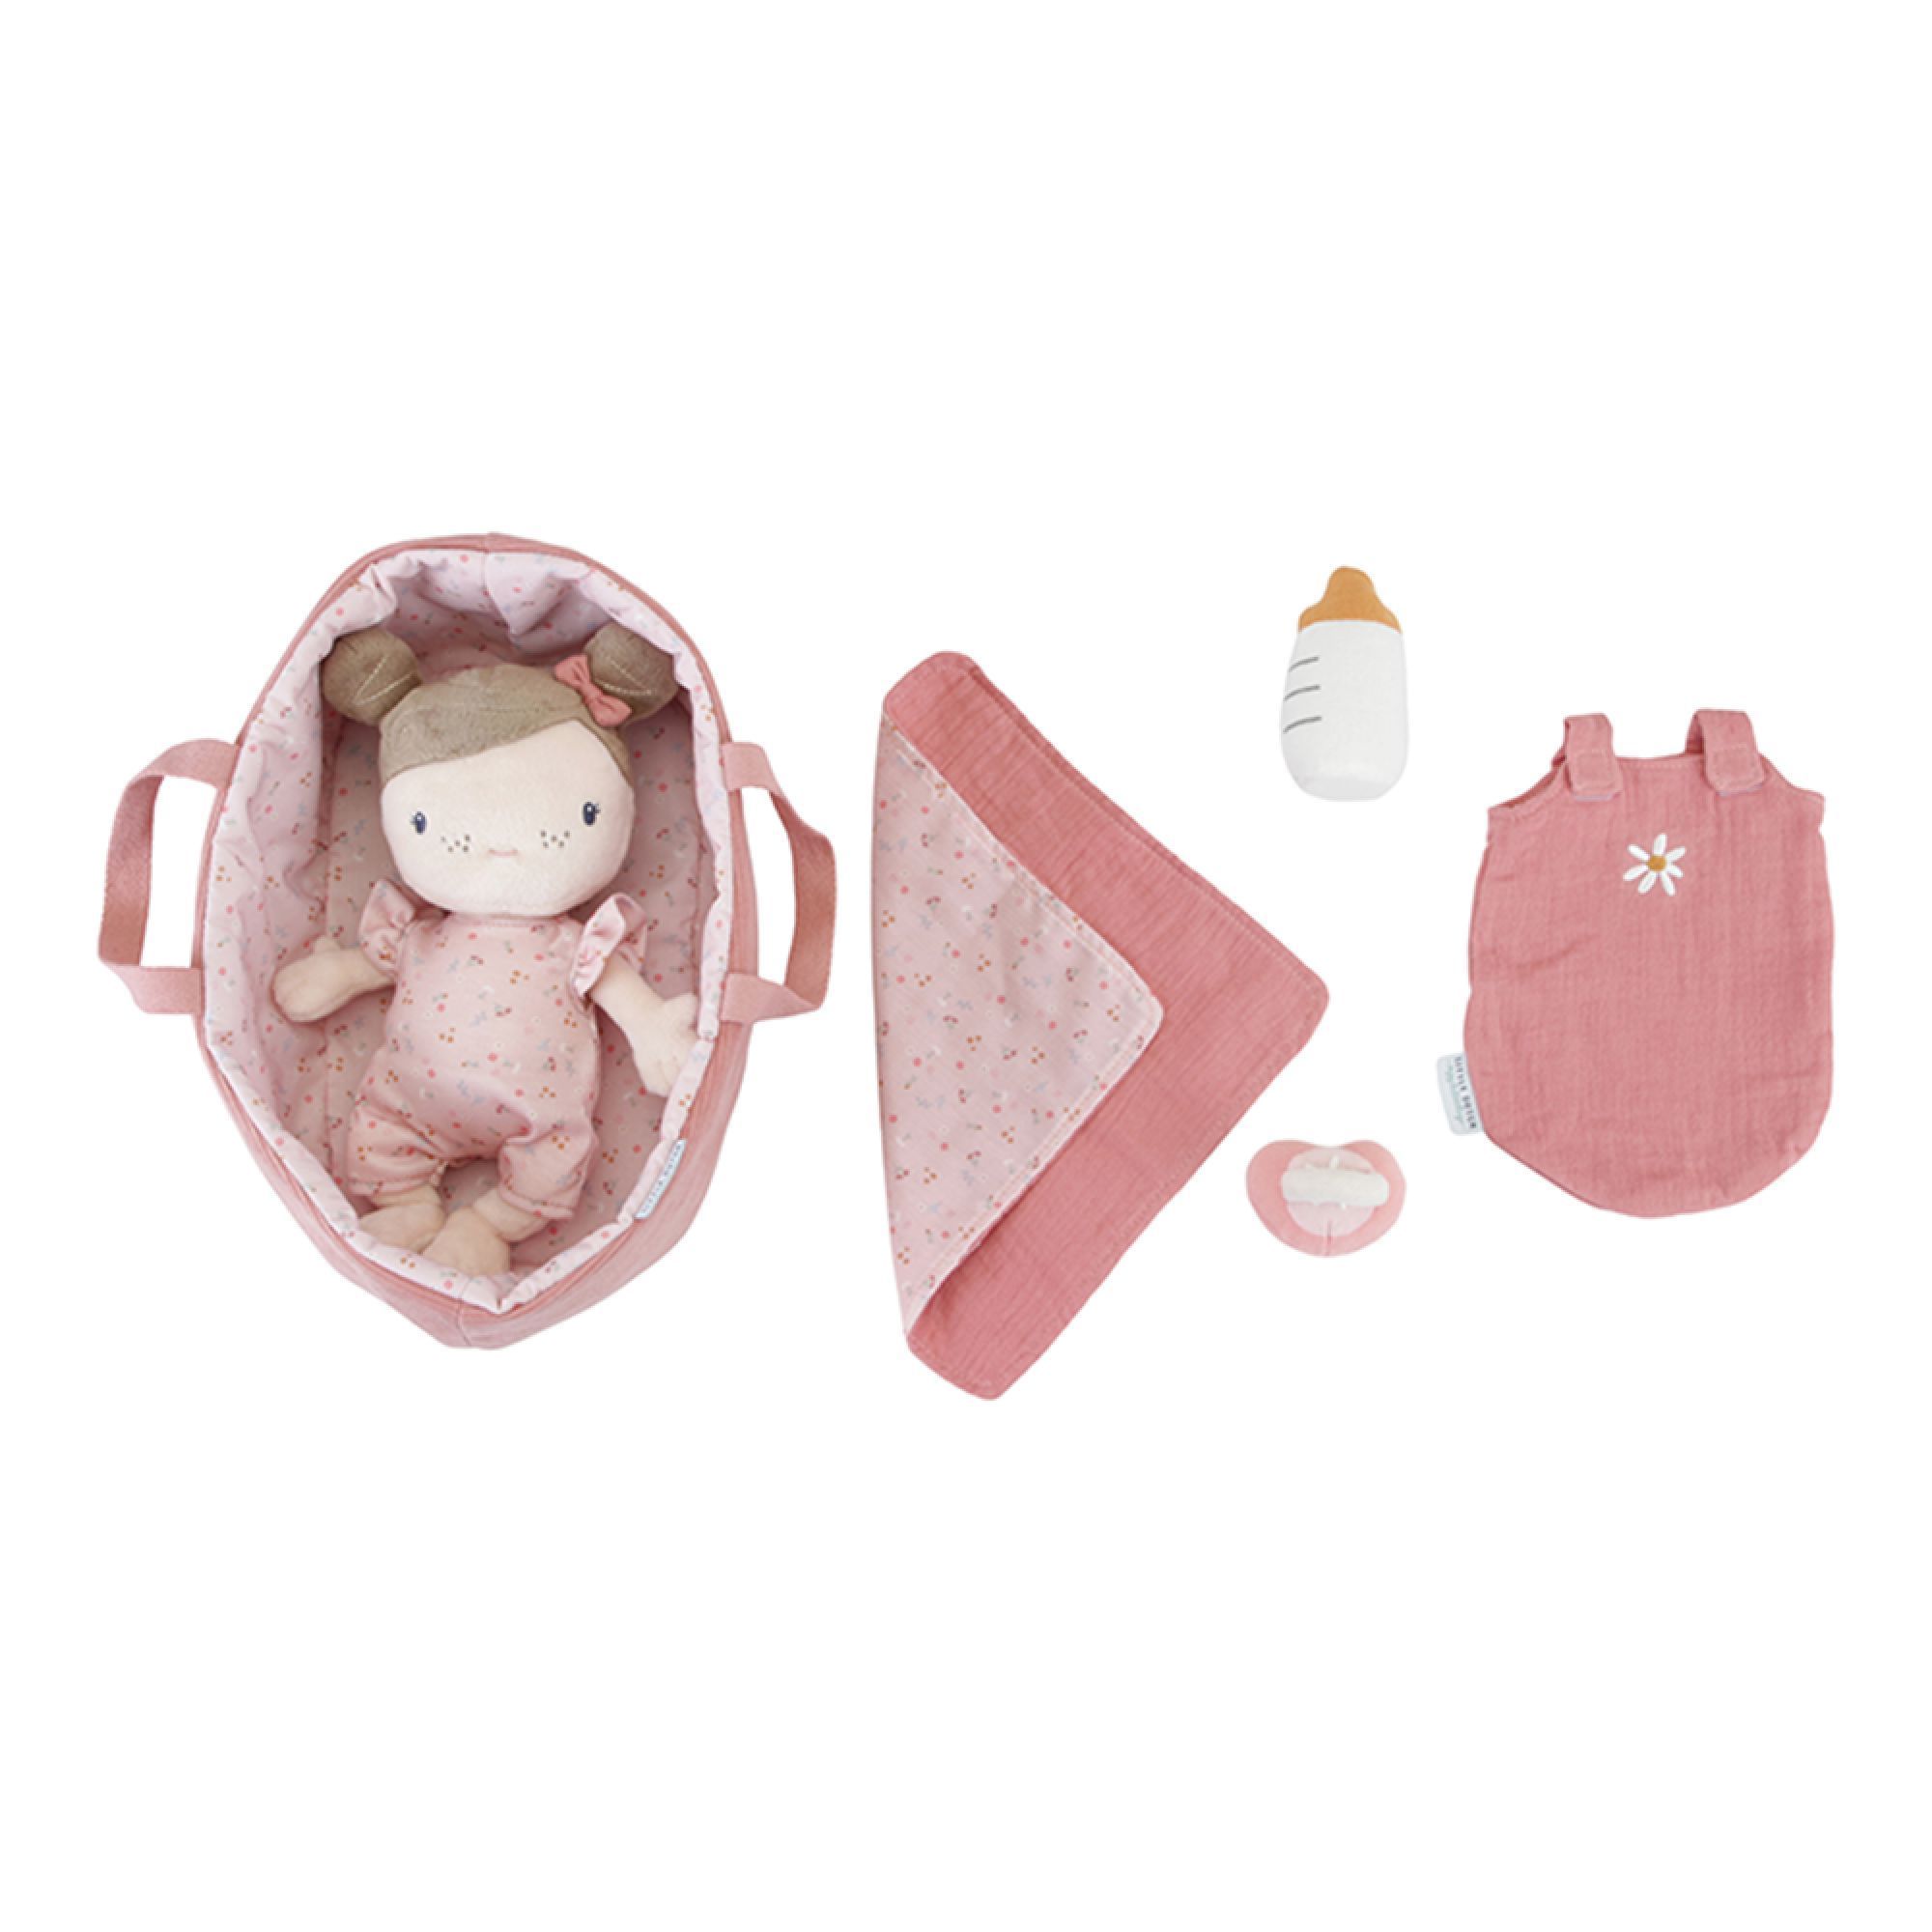 Pot bébé ergonomique Old pink - Made in Bébé